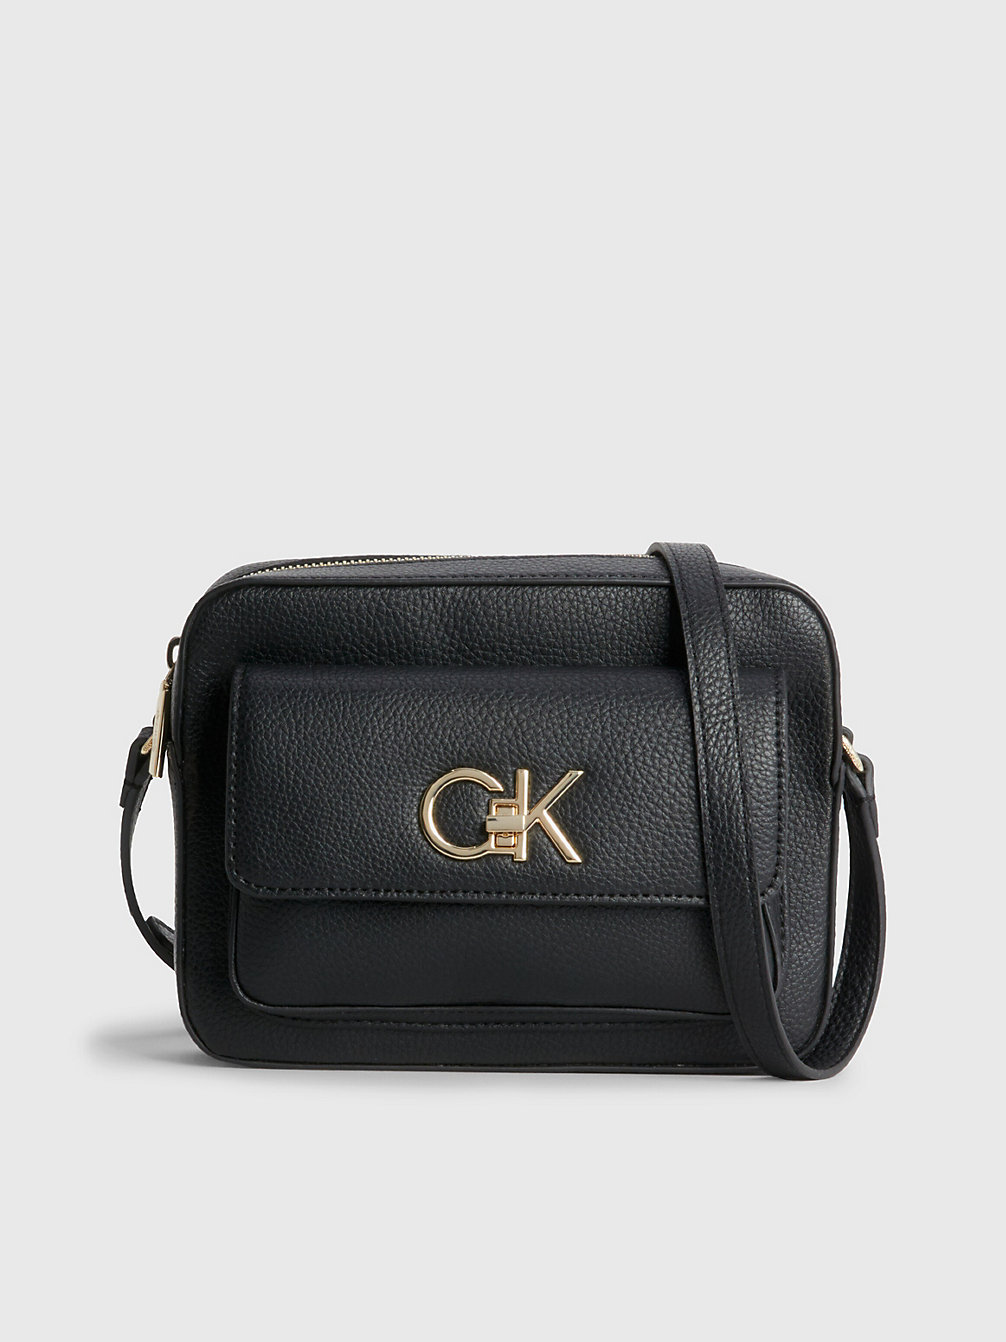 CK BLACK Crossbody Bag undefined women Calvin Klein